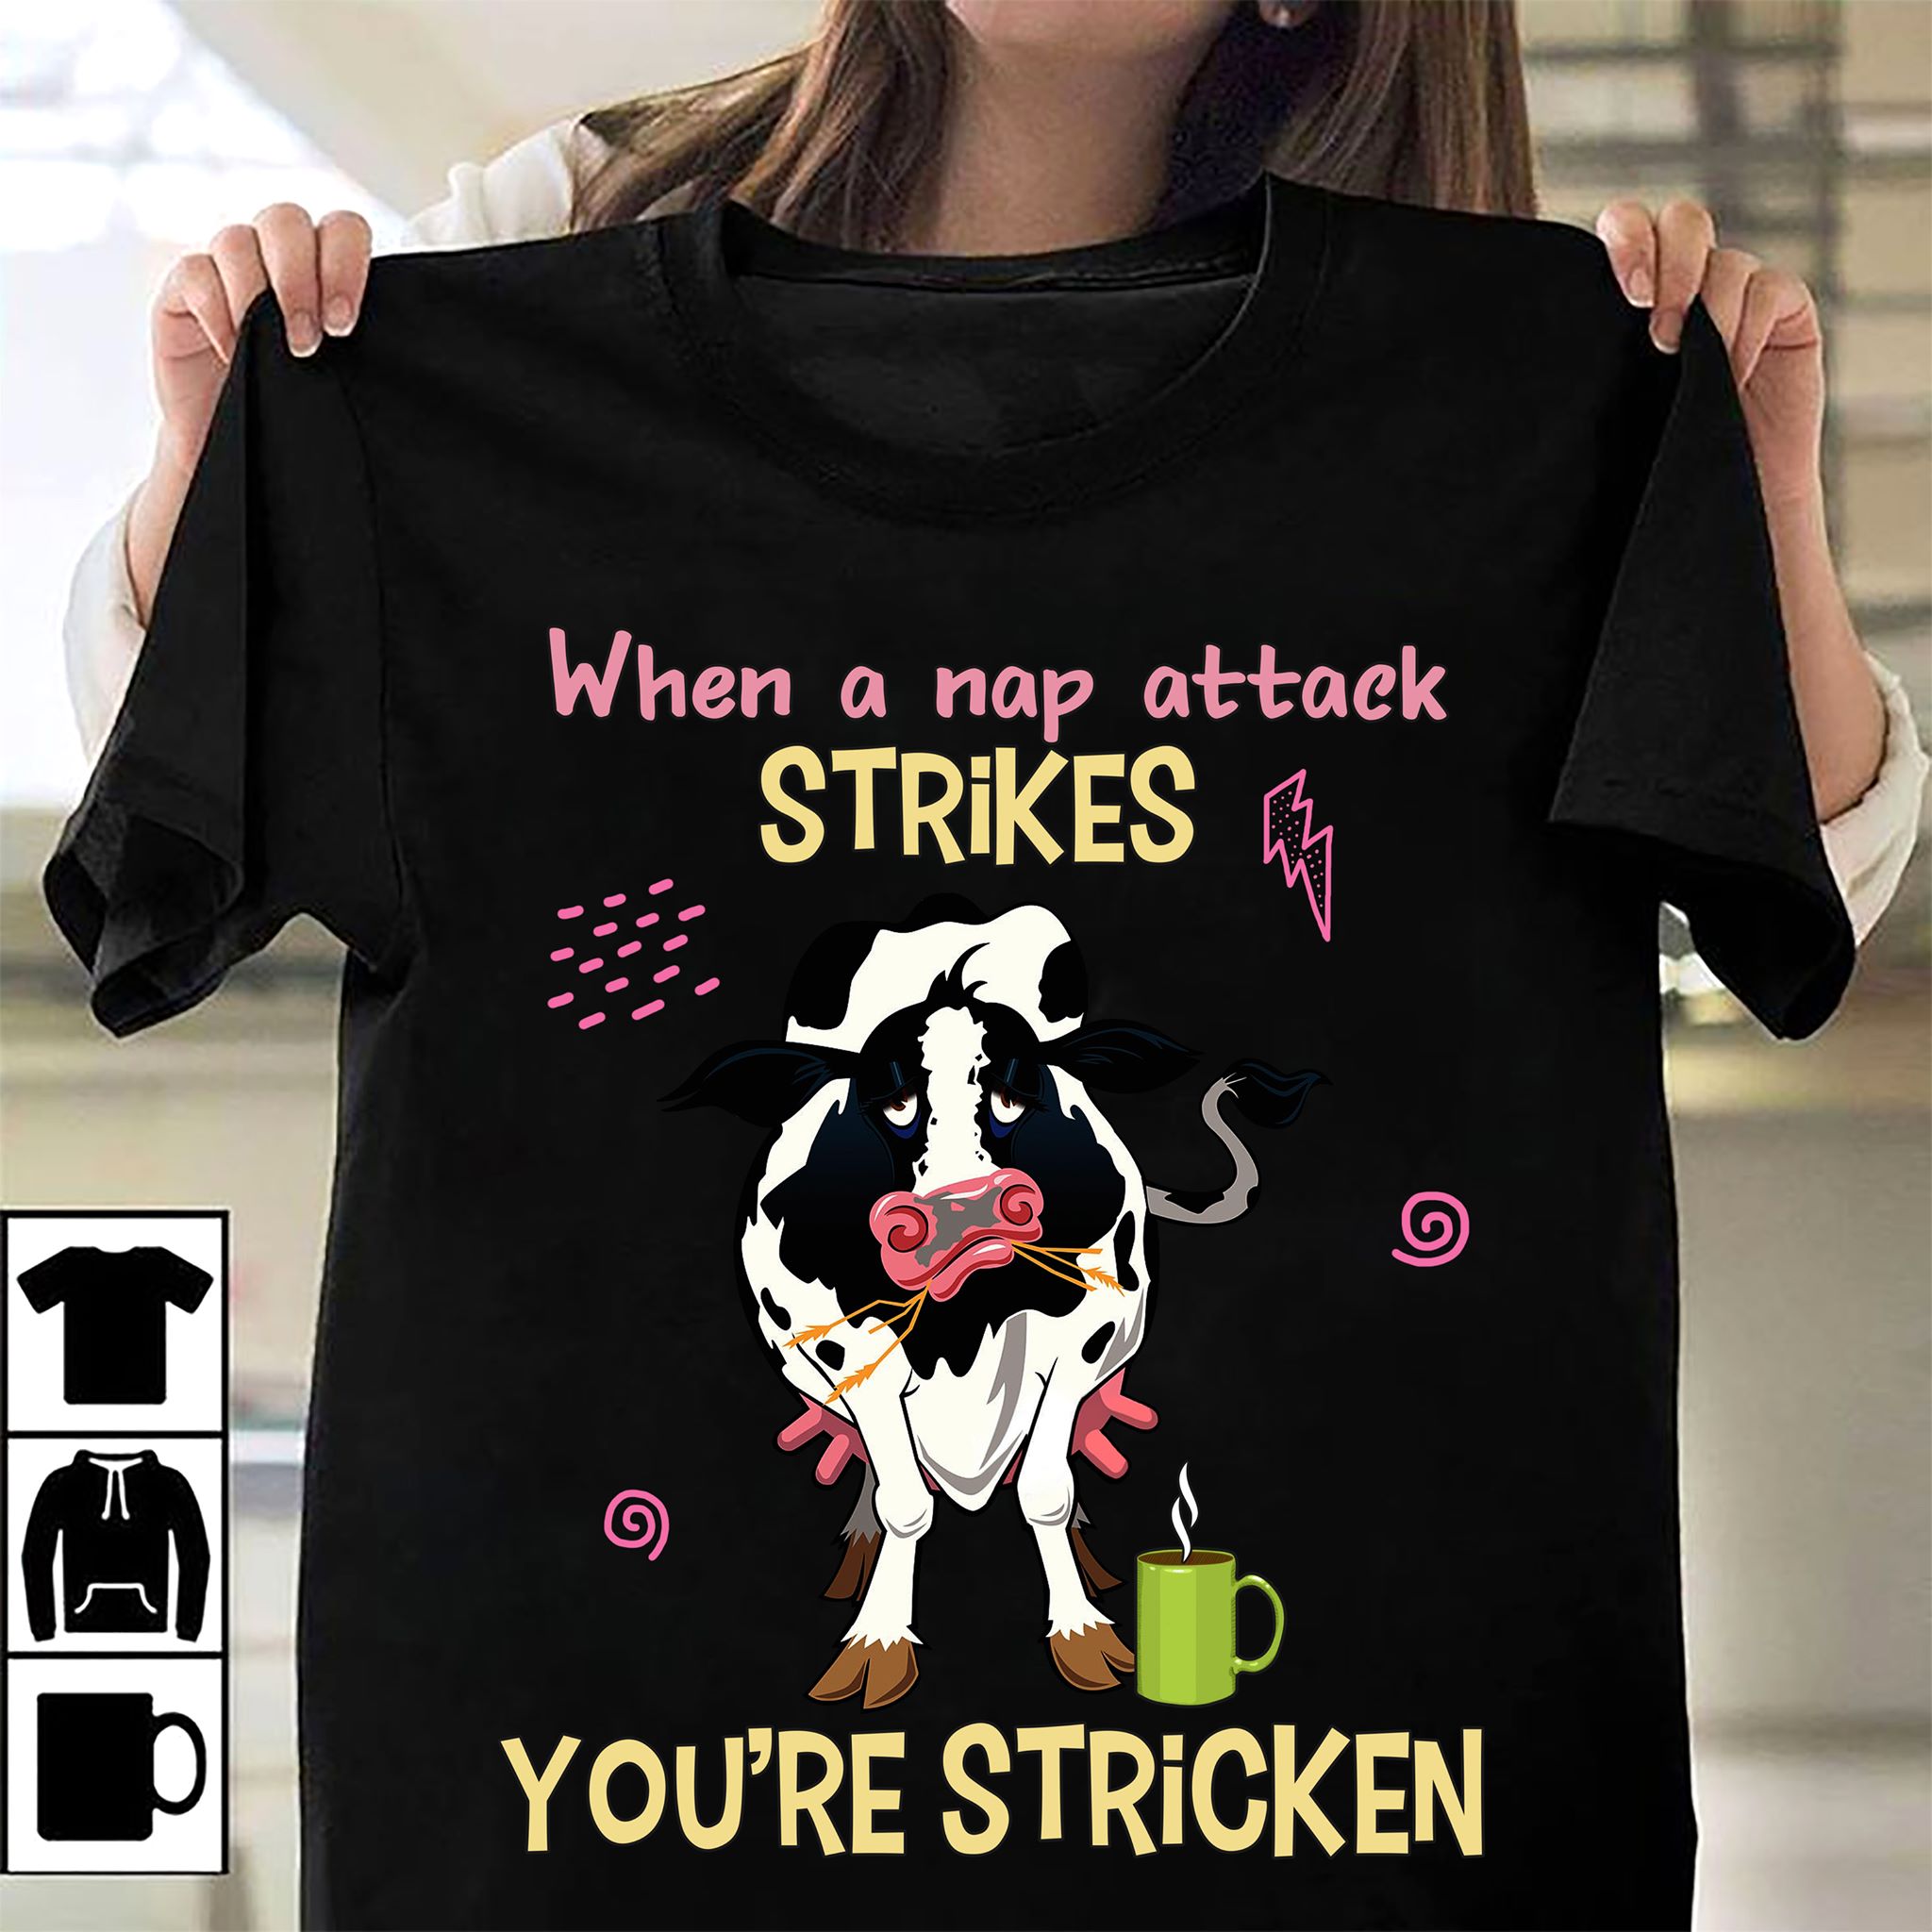 When a nap attack strikes you're stricken - Grumpy cow